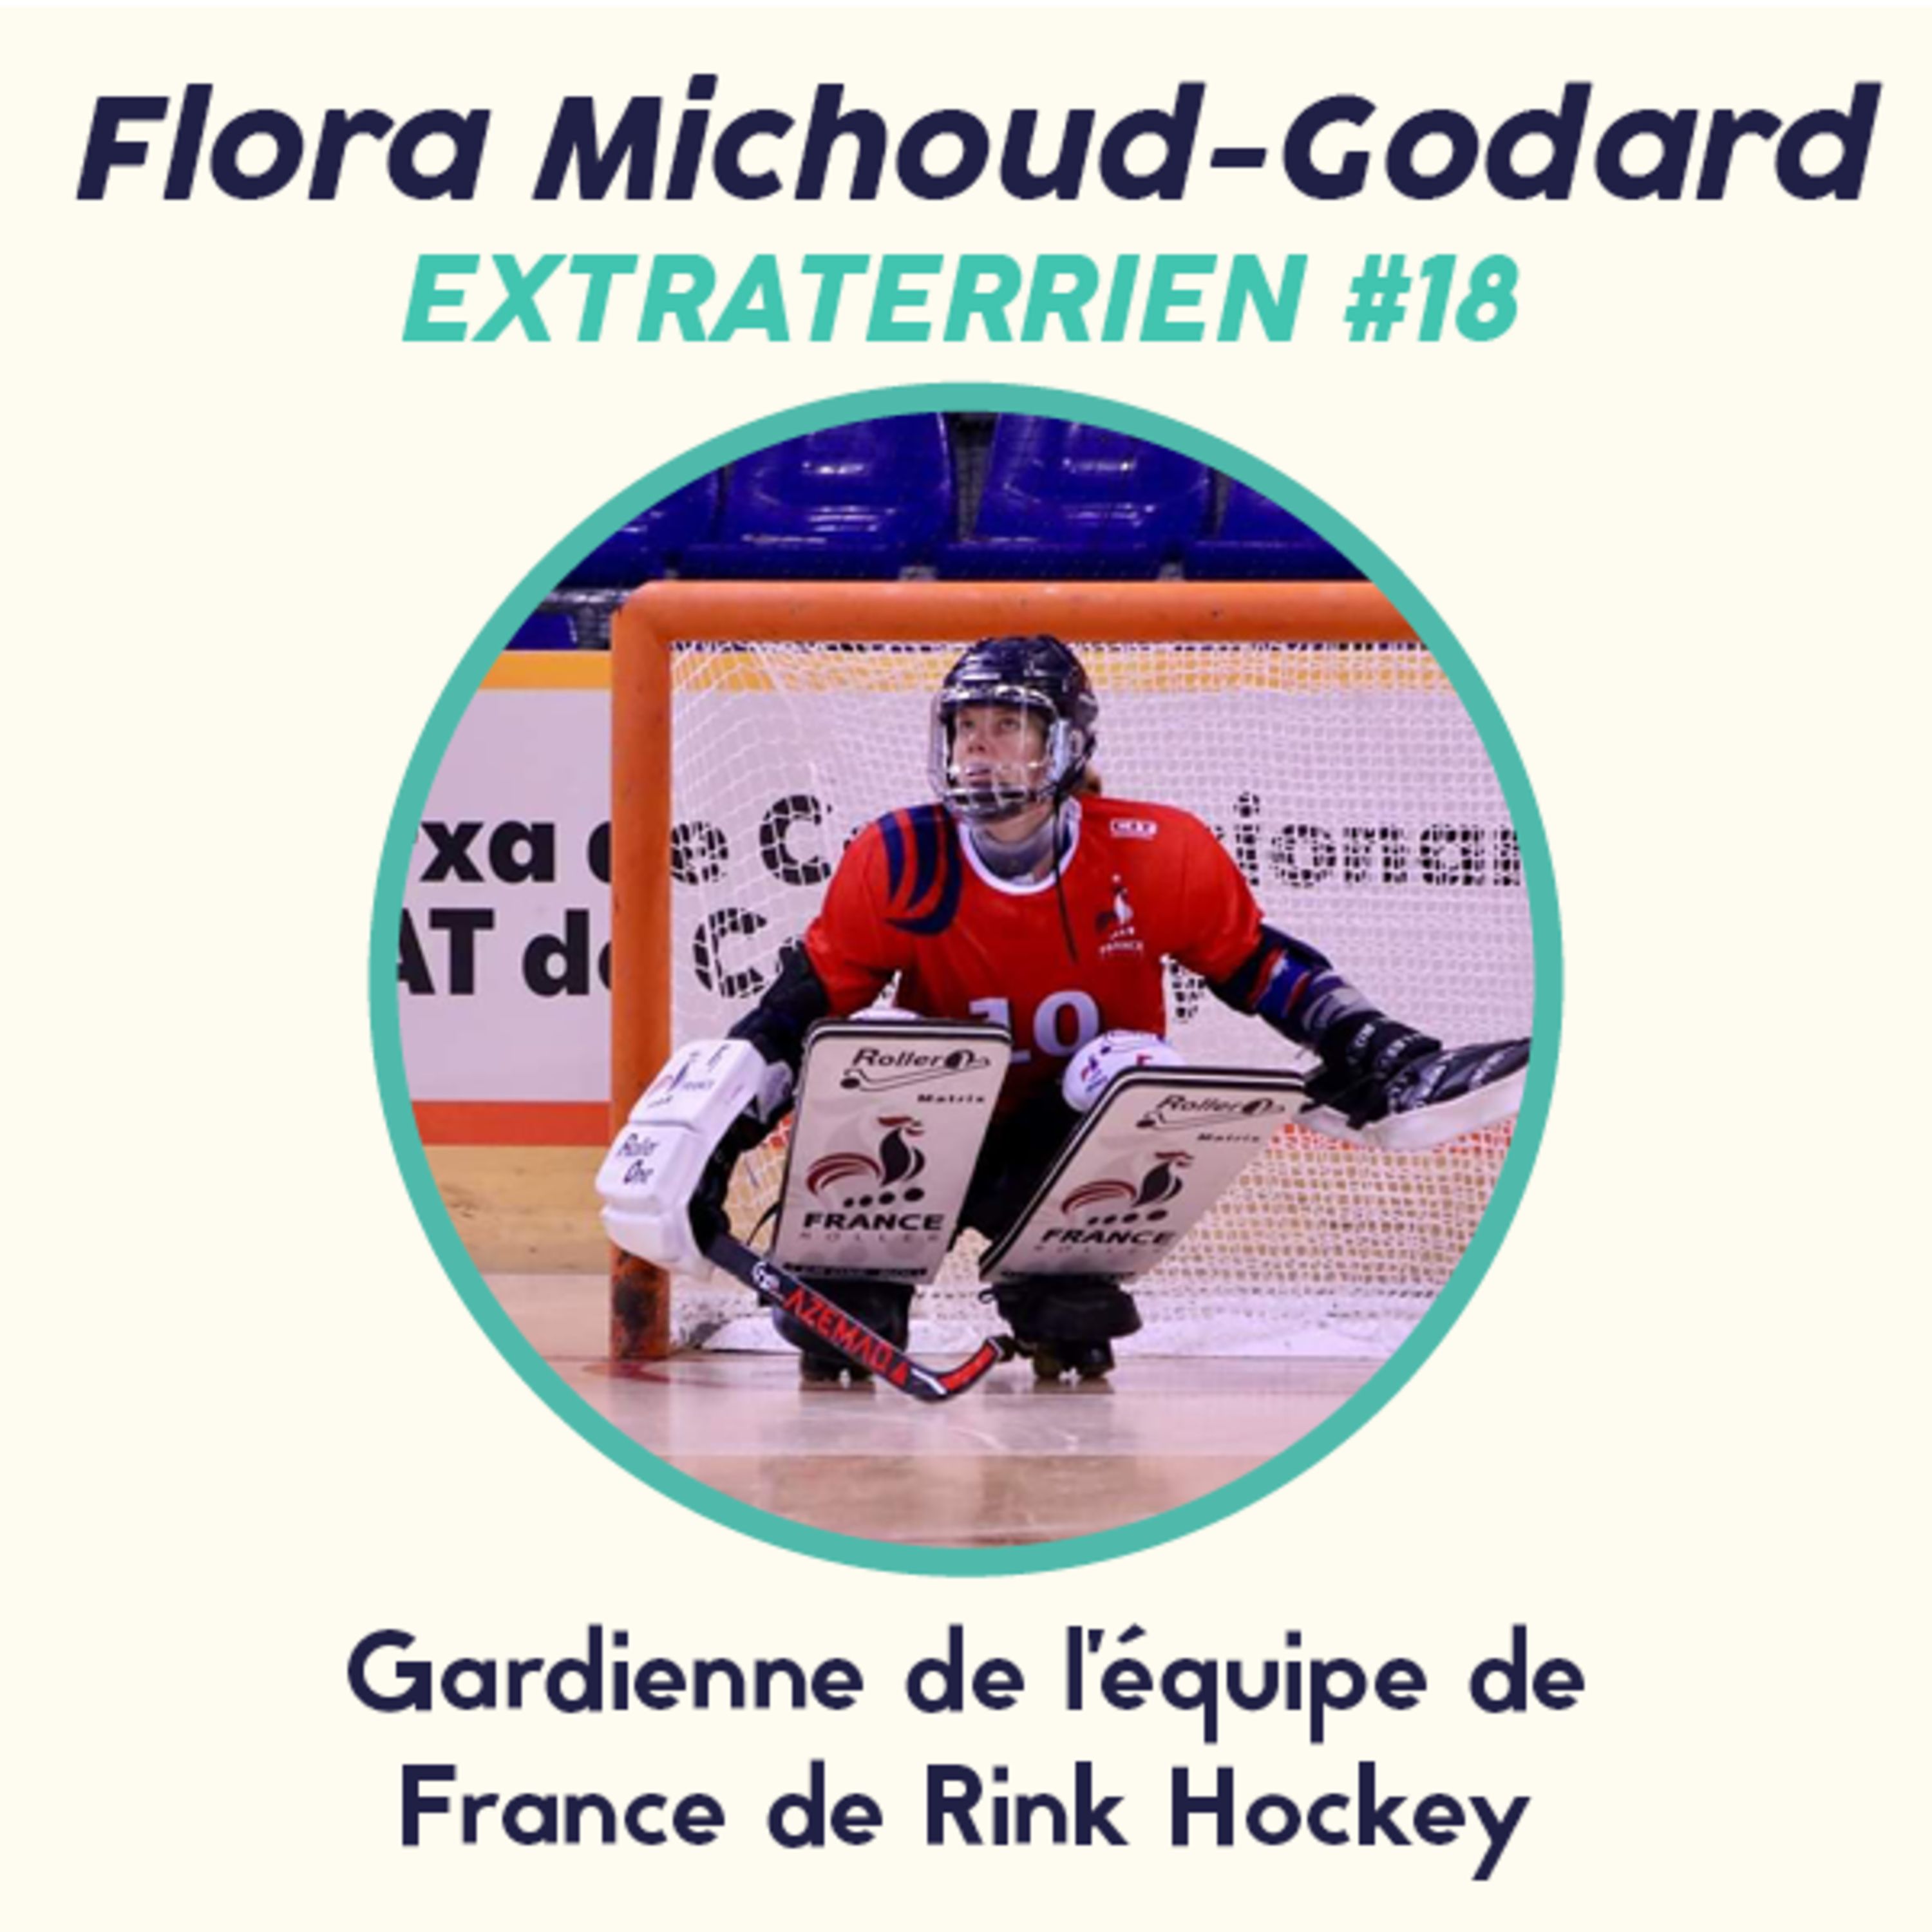 cover art for #18 Flora Michoud-Godard - Gardienne de l'équipe de France de Rink Hockey